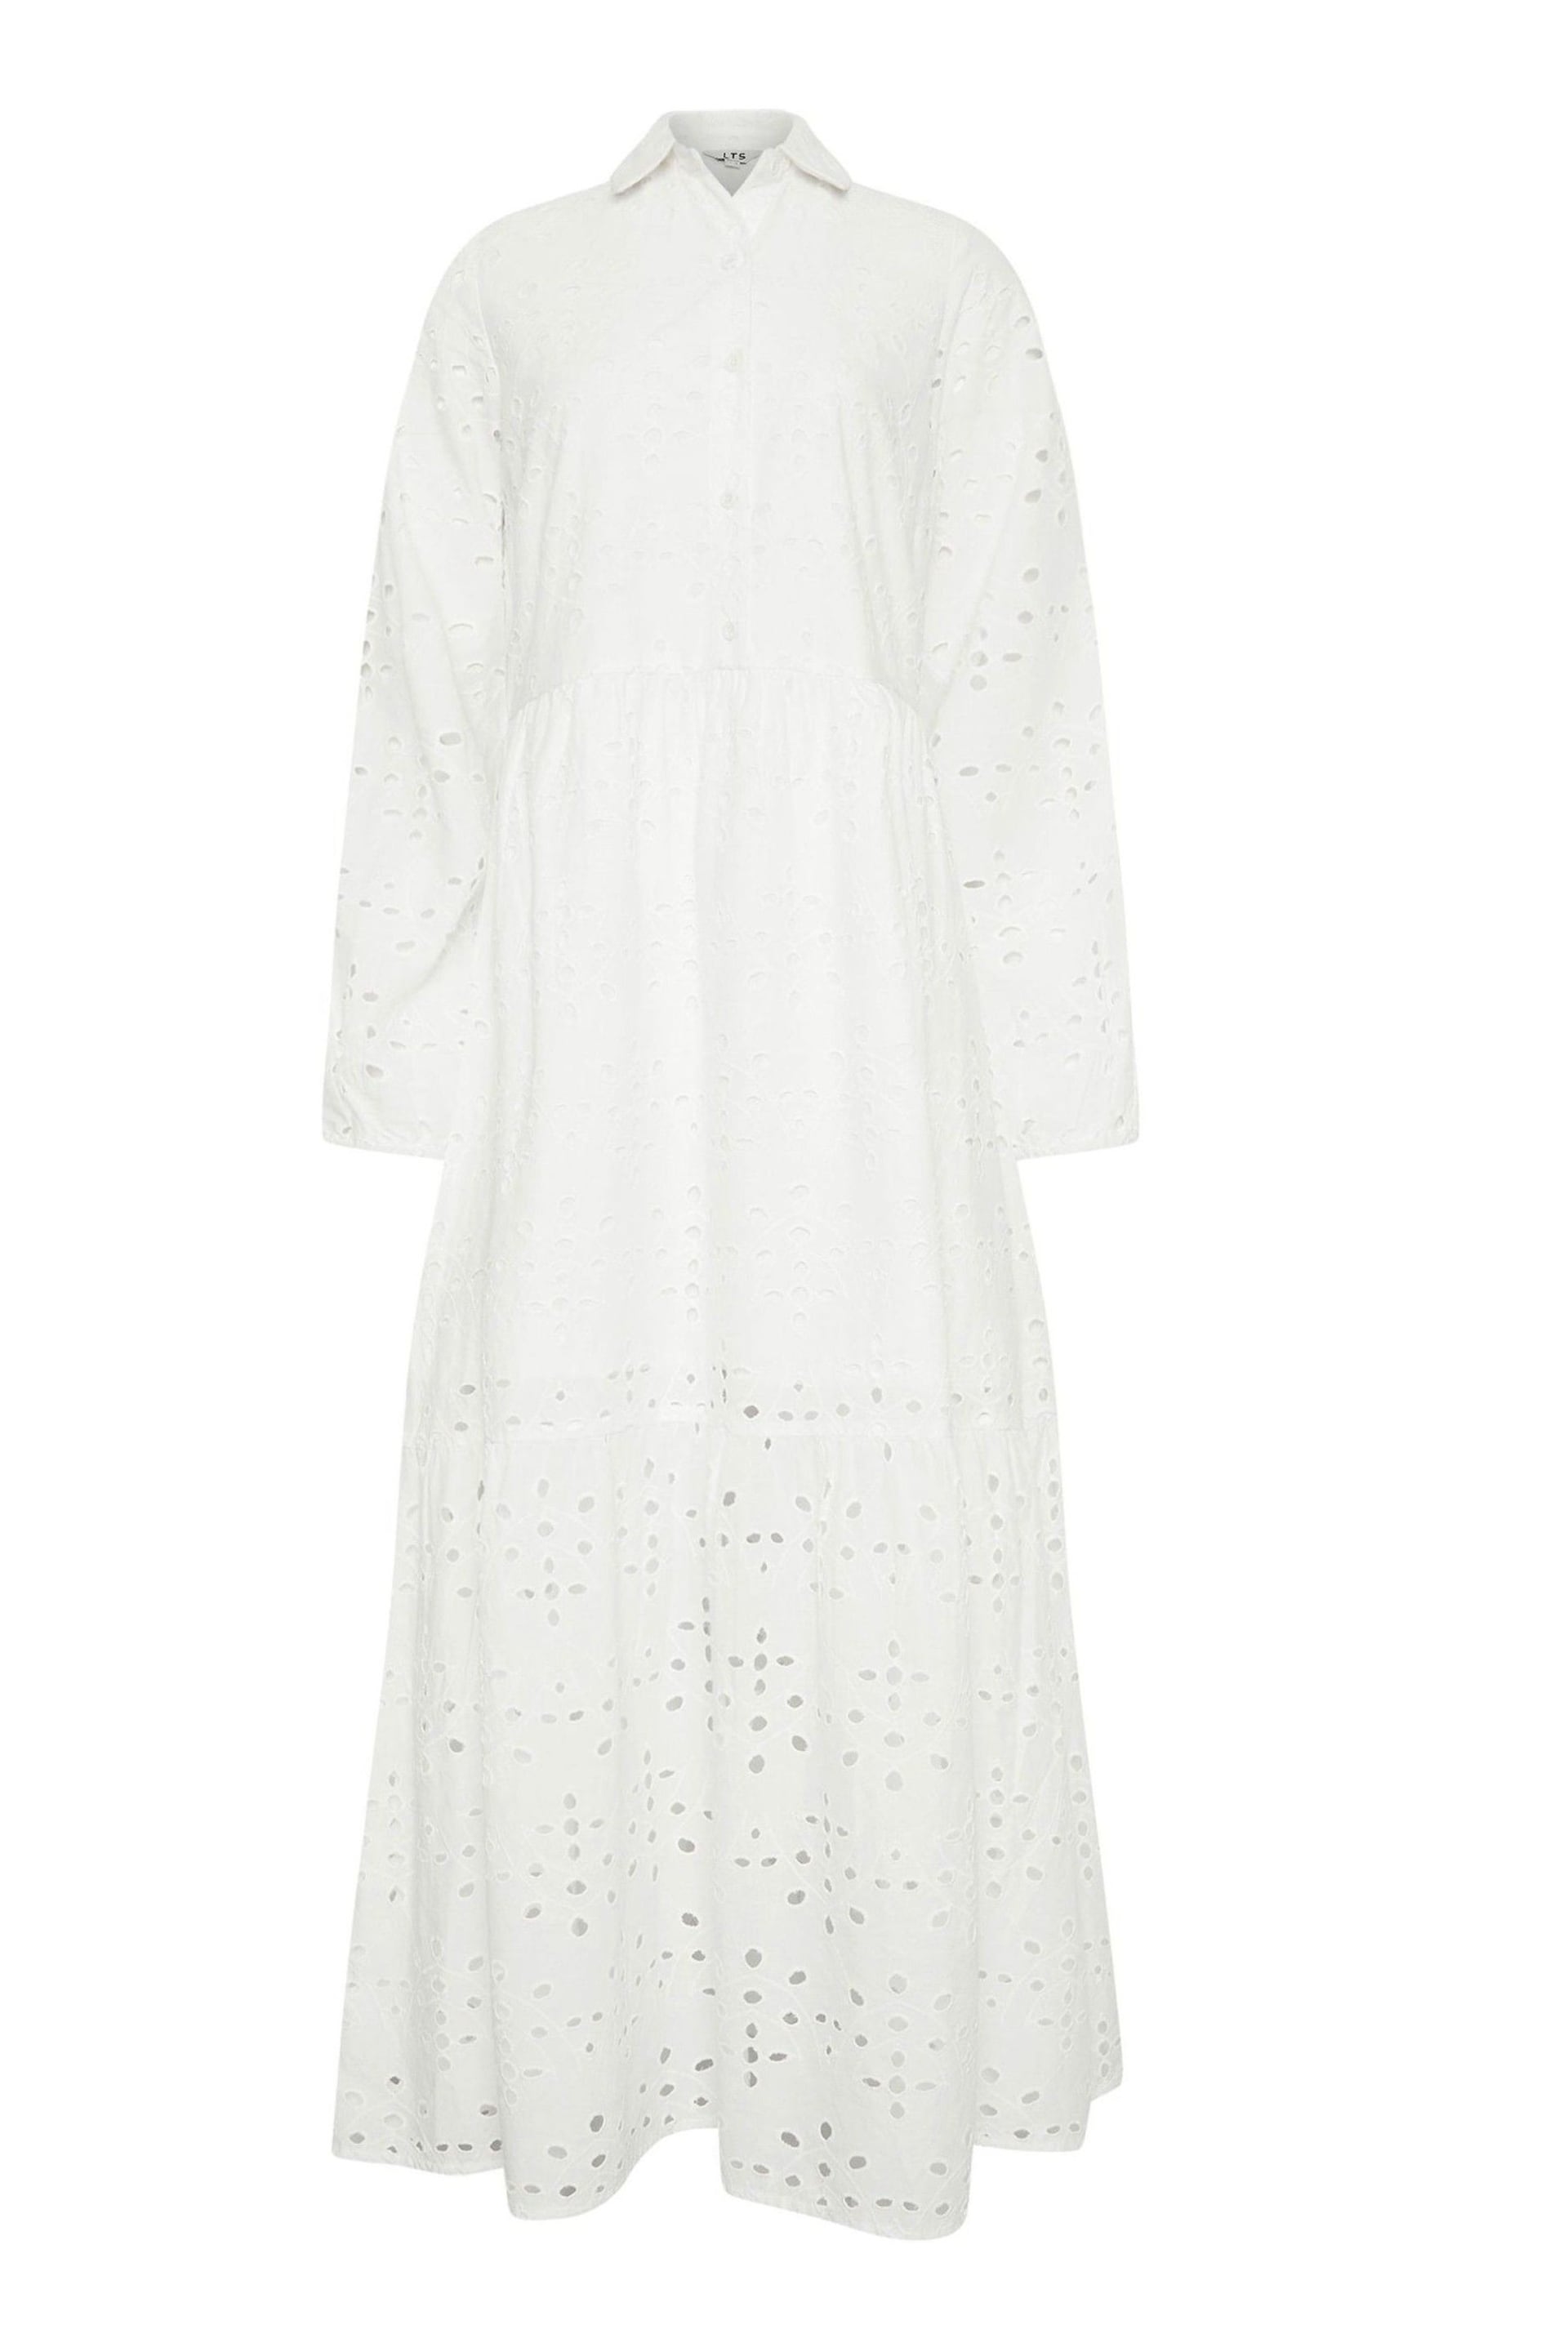 Long Tall Sally White Broidered Long Sleeve Shirt Dress - Image 6 of 6